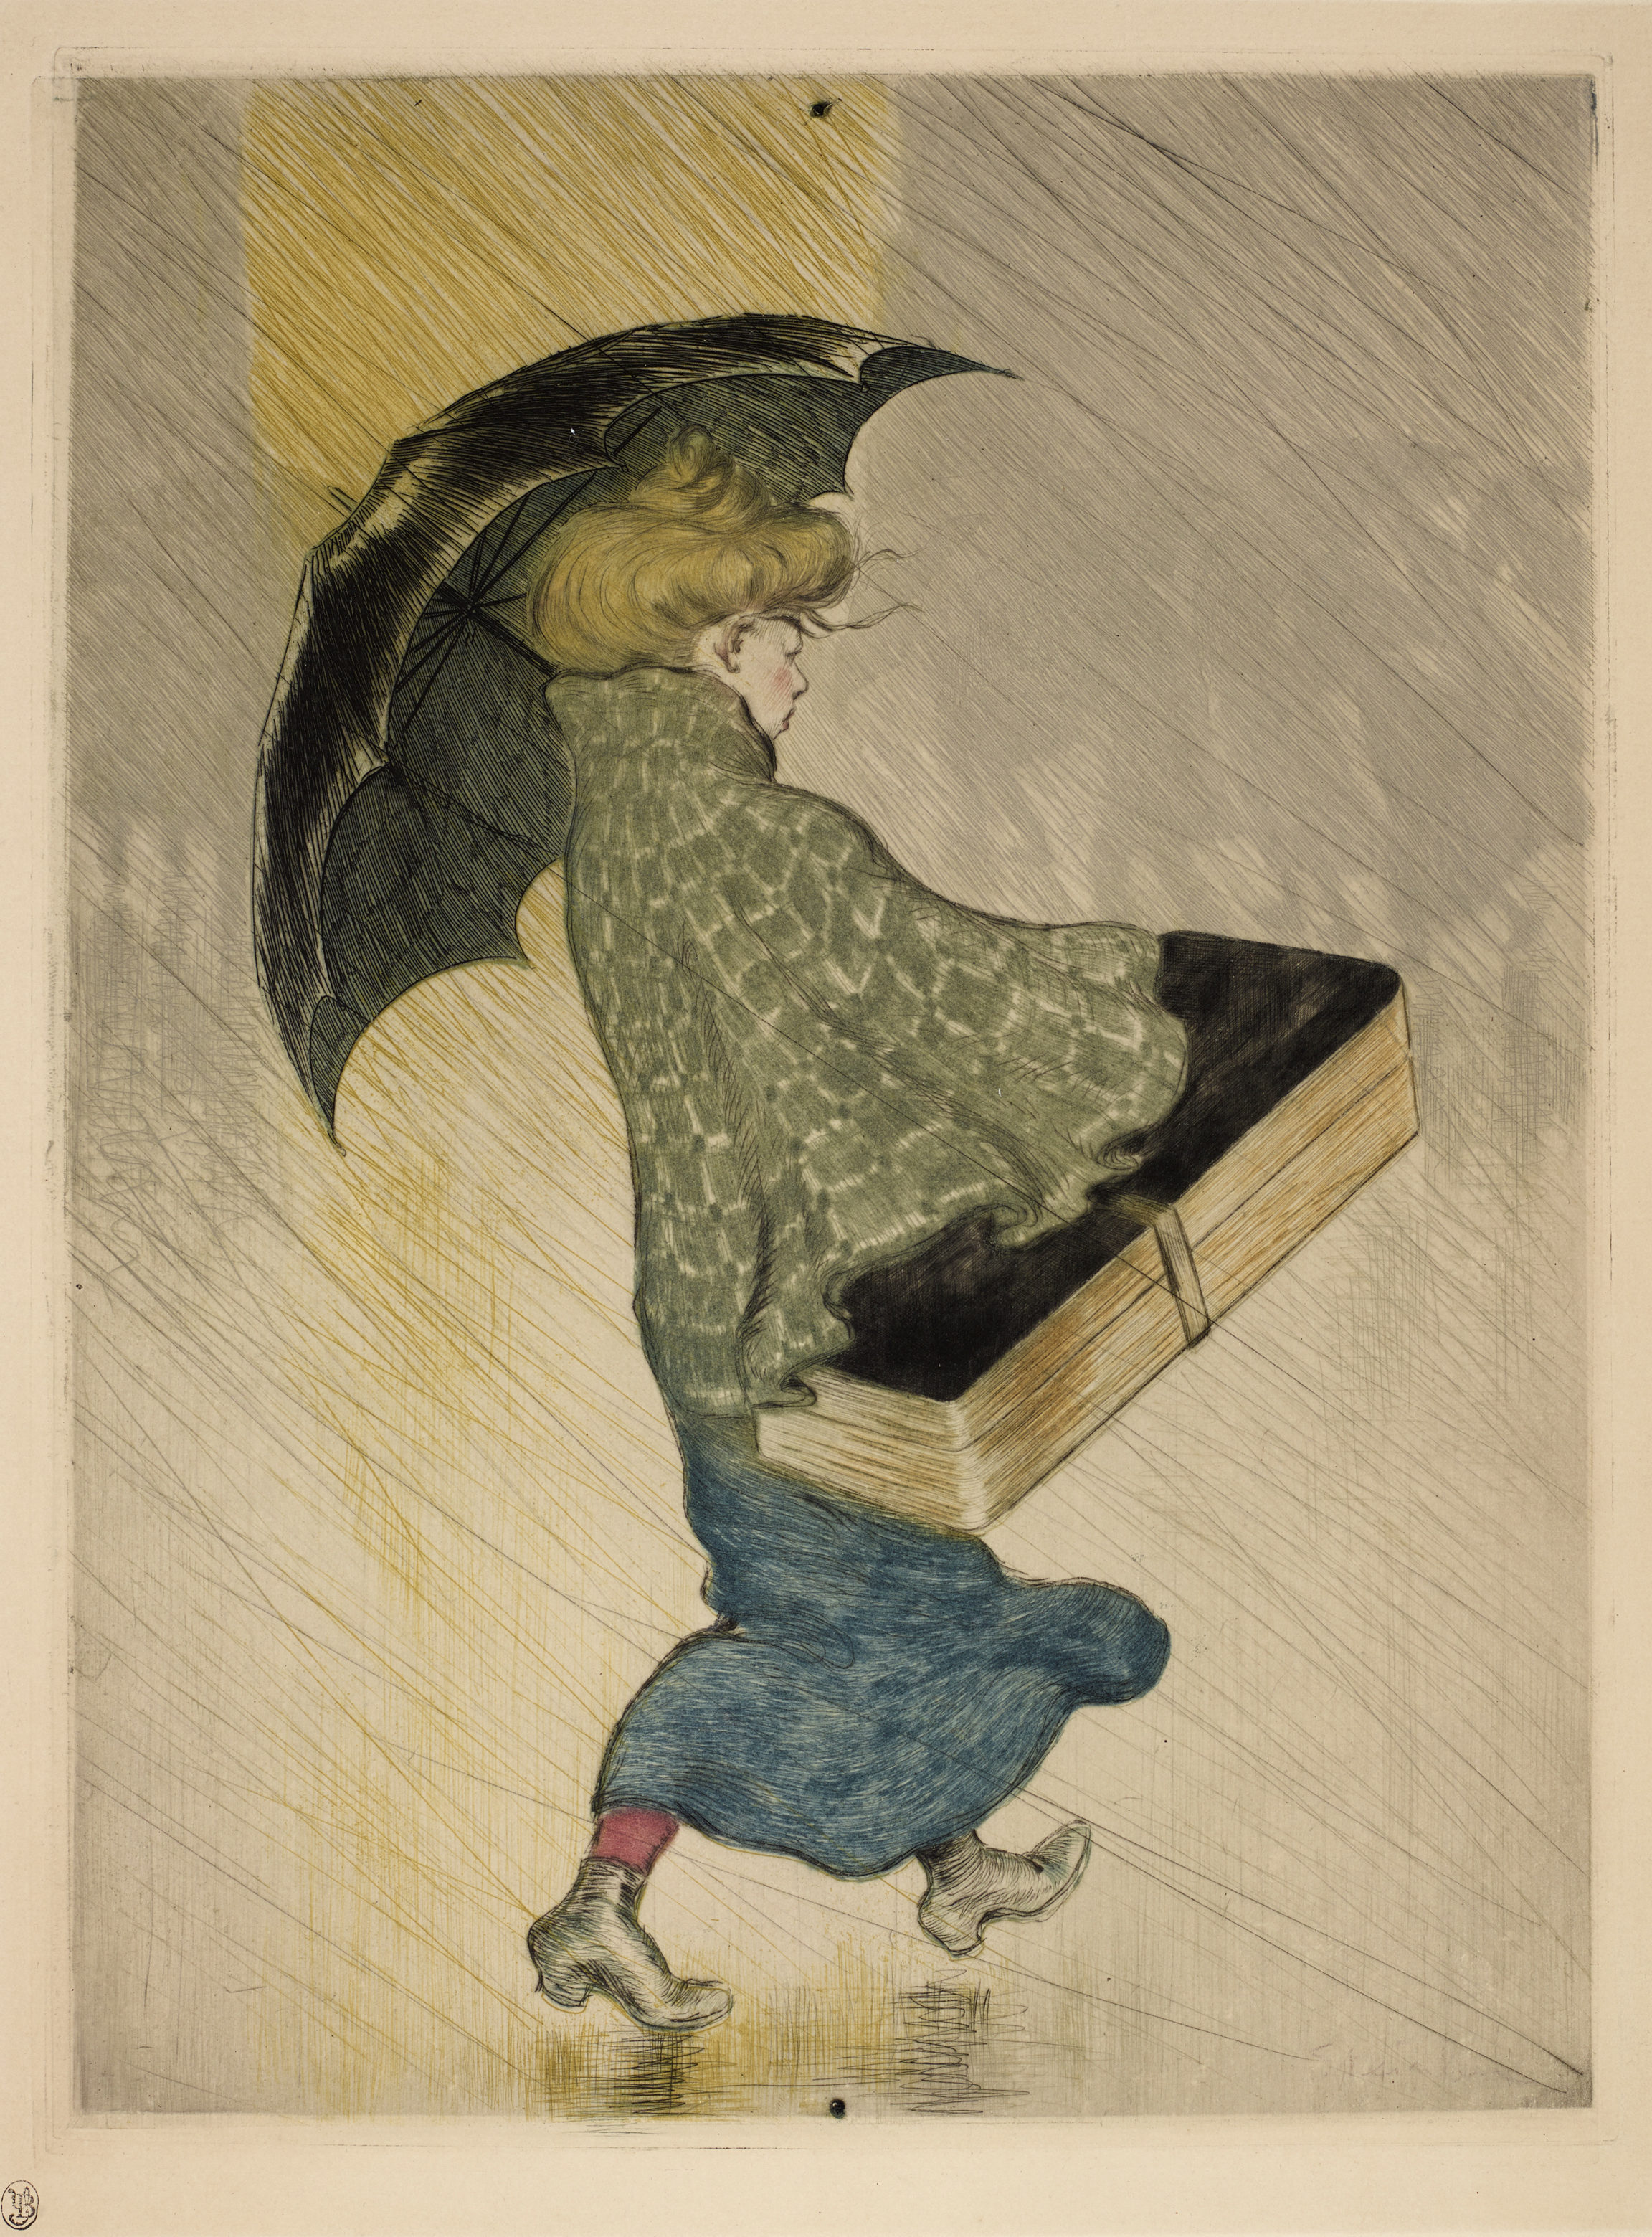 Théophile-Alexandre Steinlen, Trottin sous la pluie (Delivery Girl in the Rain), 1898